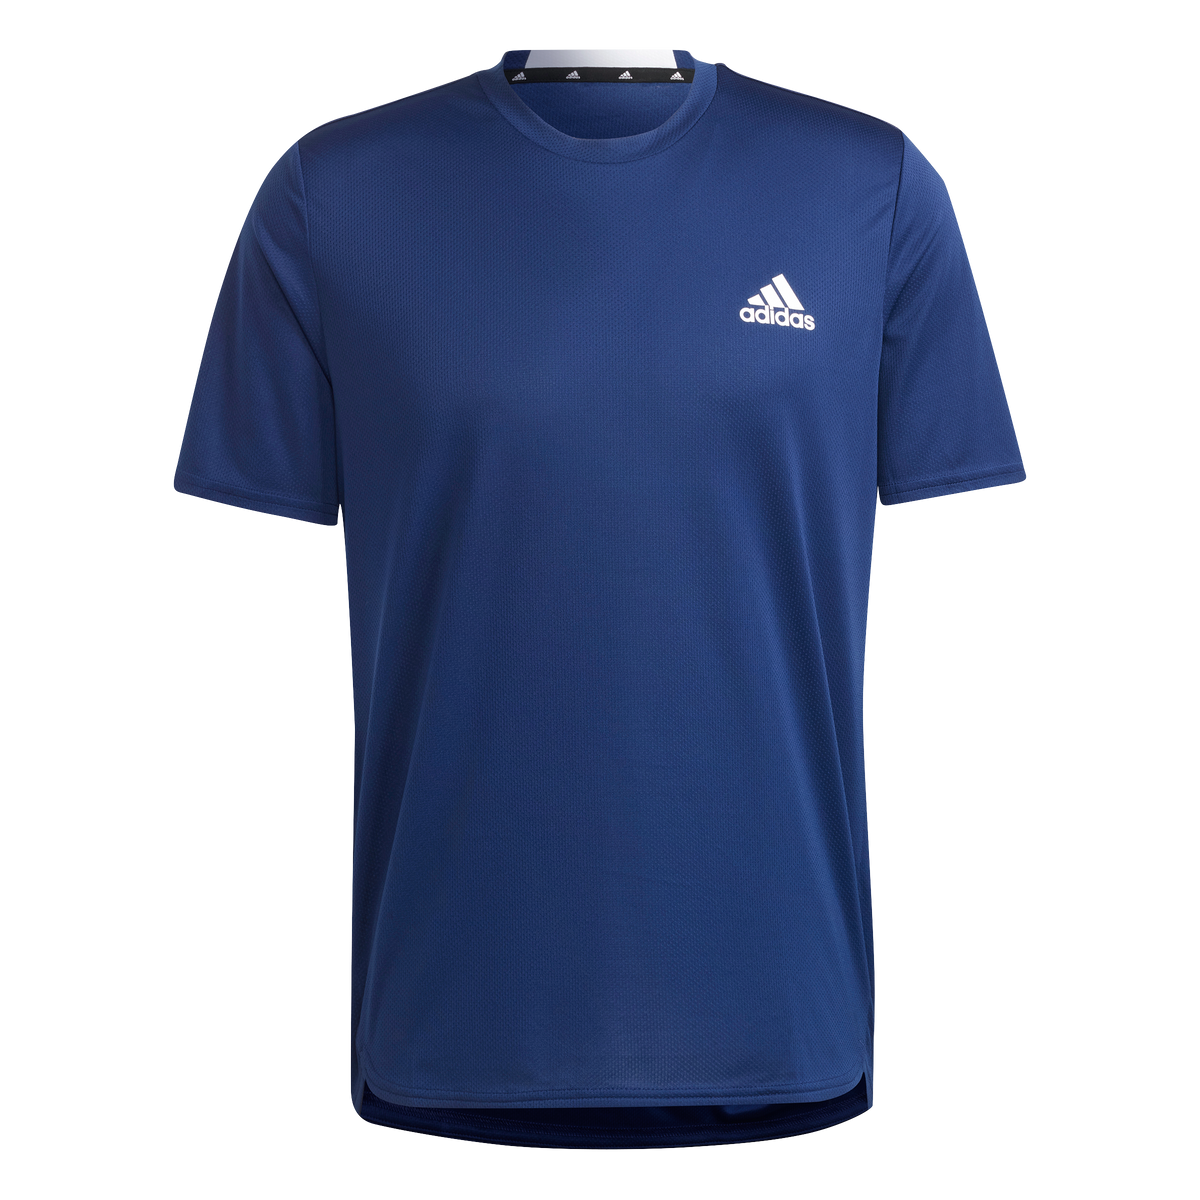 Camiseta 216 Aeroready Desgned For Movement Marca Adidas